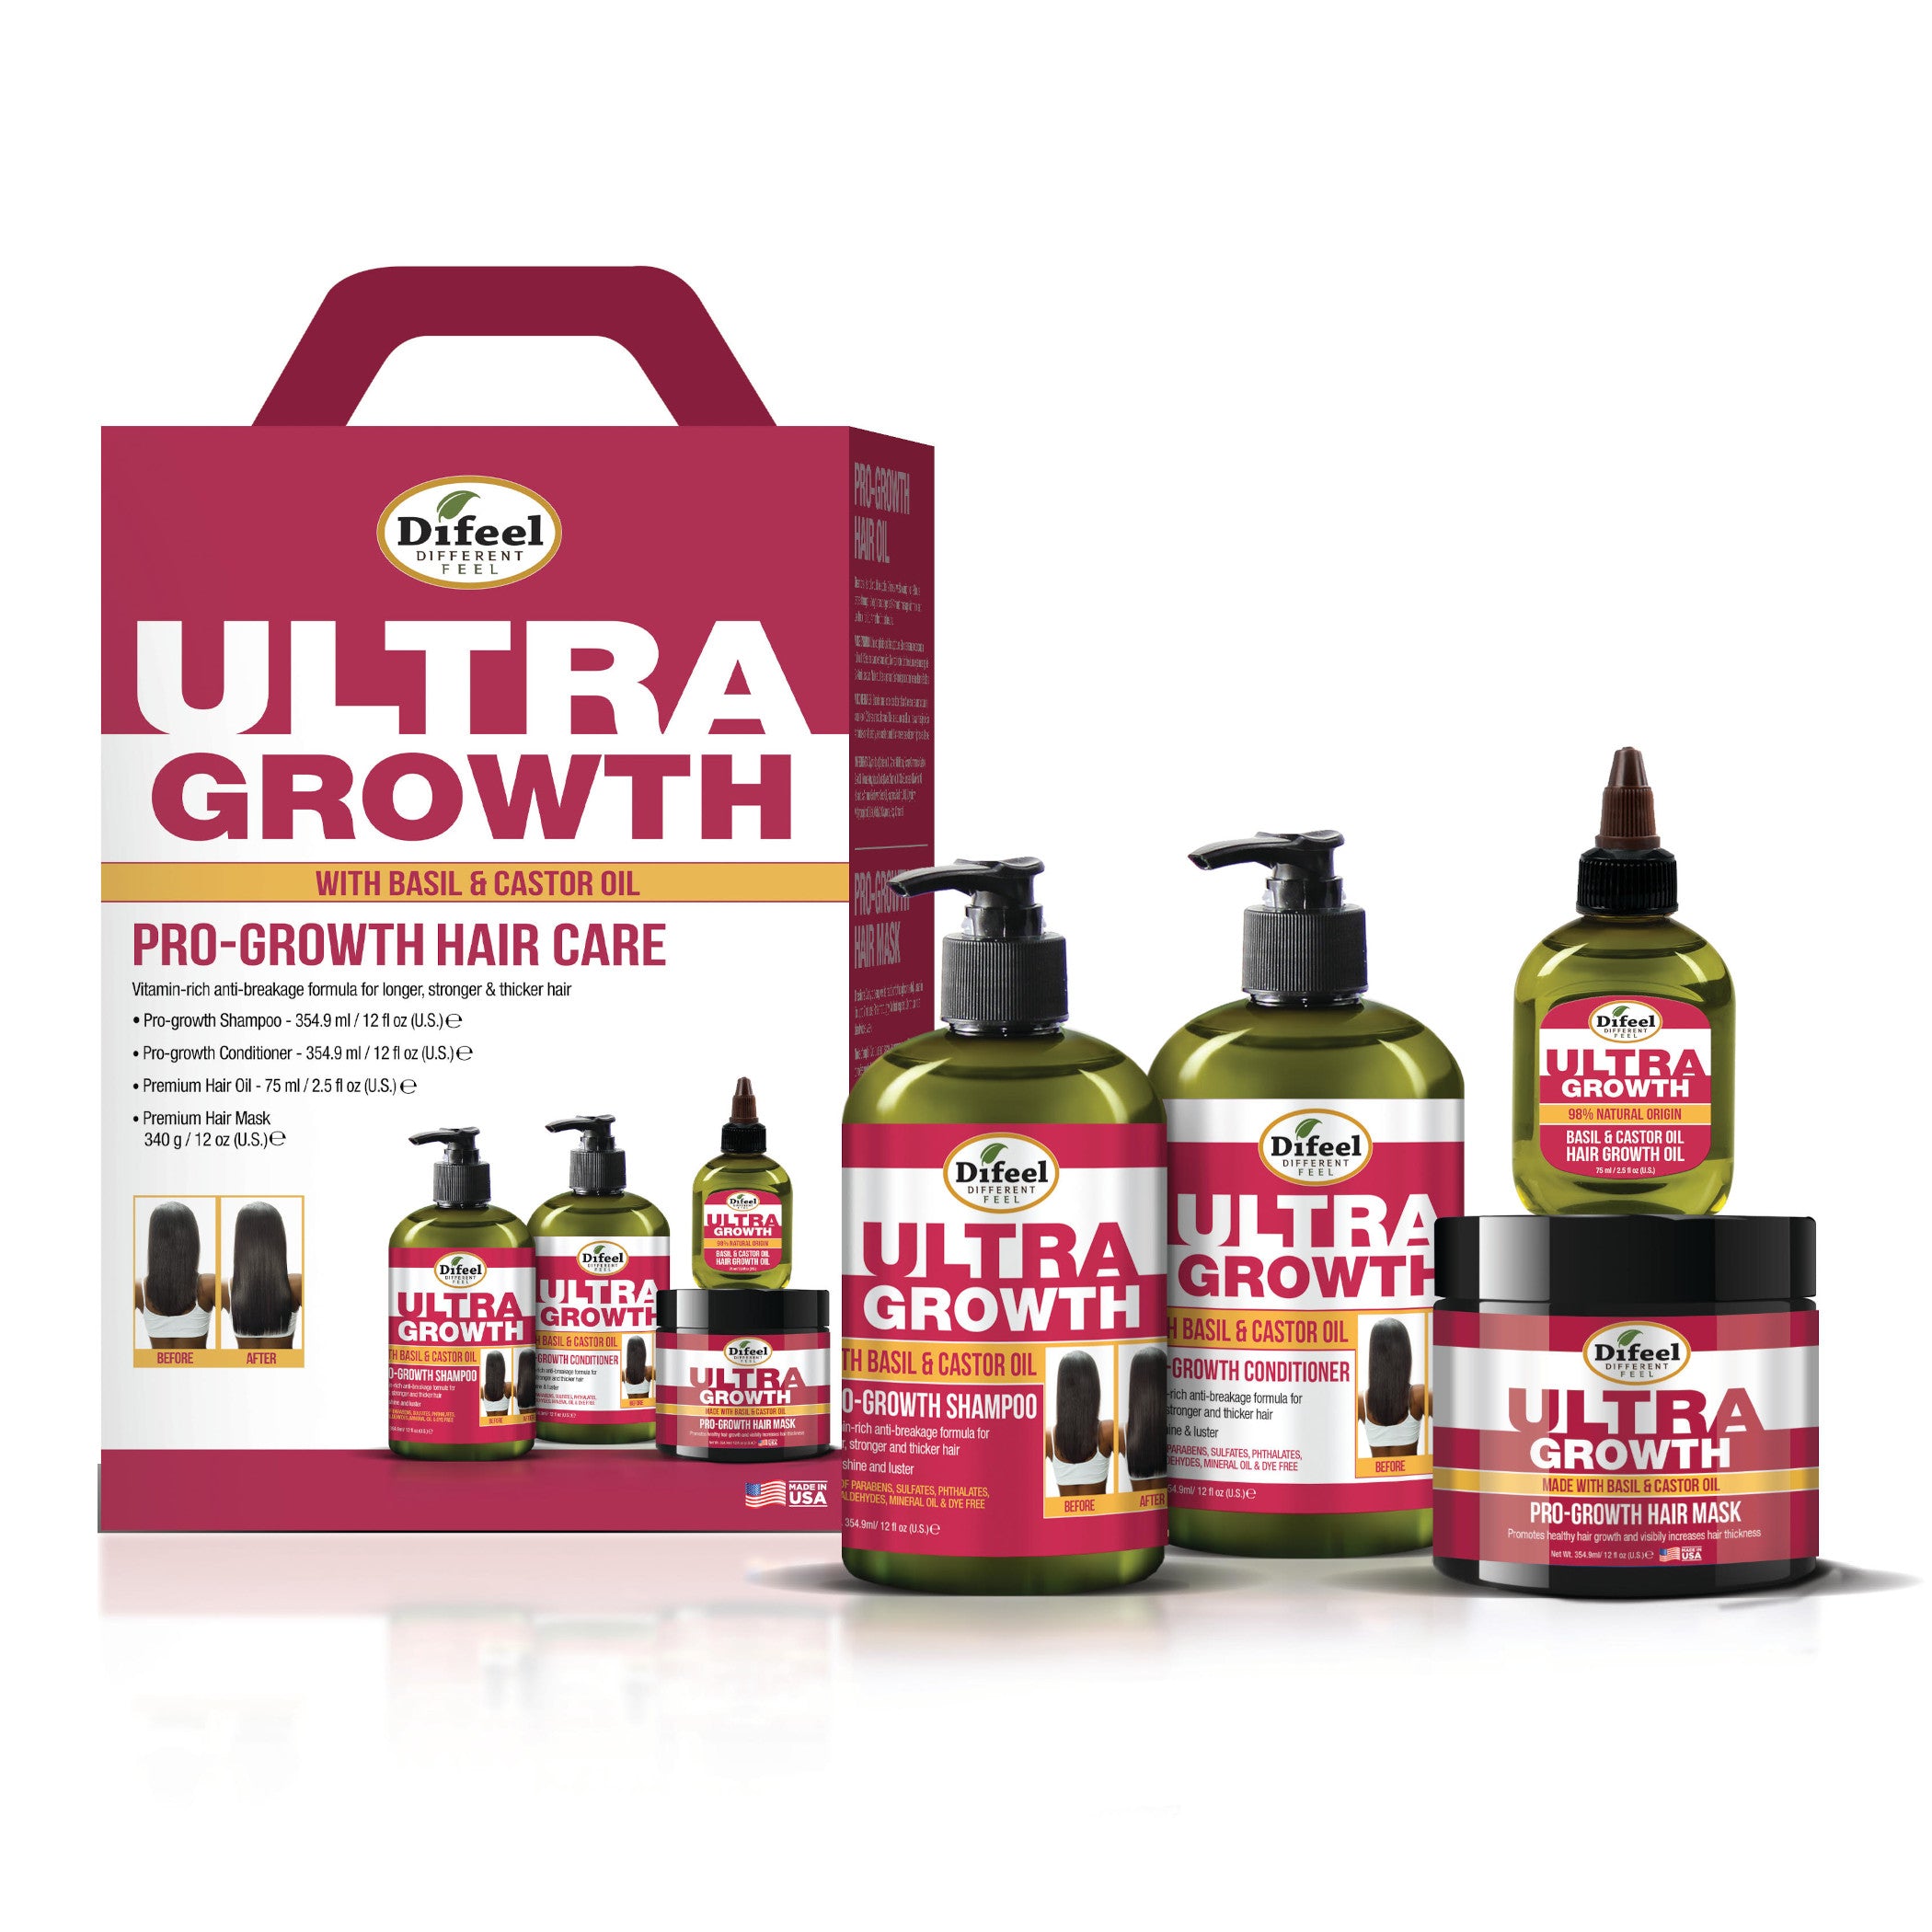 Difeel Ultra Growth with Basil & Castor Oil 4-PC Hair Care Gift Set - Includes Shampoo 12 oz. , Conditioner 12 oz. , Hair Oil 2.5oz and Hair Mask 12 oz. .